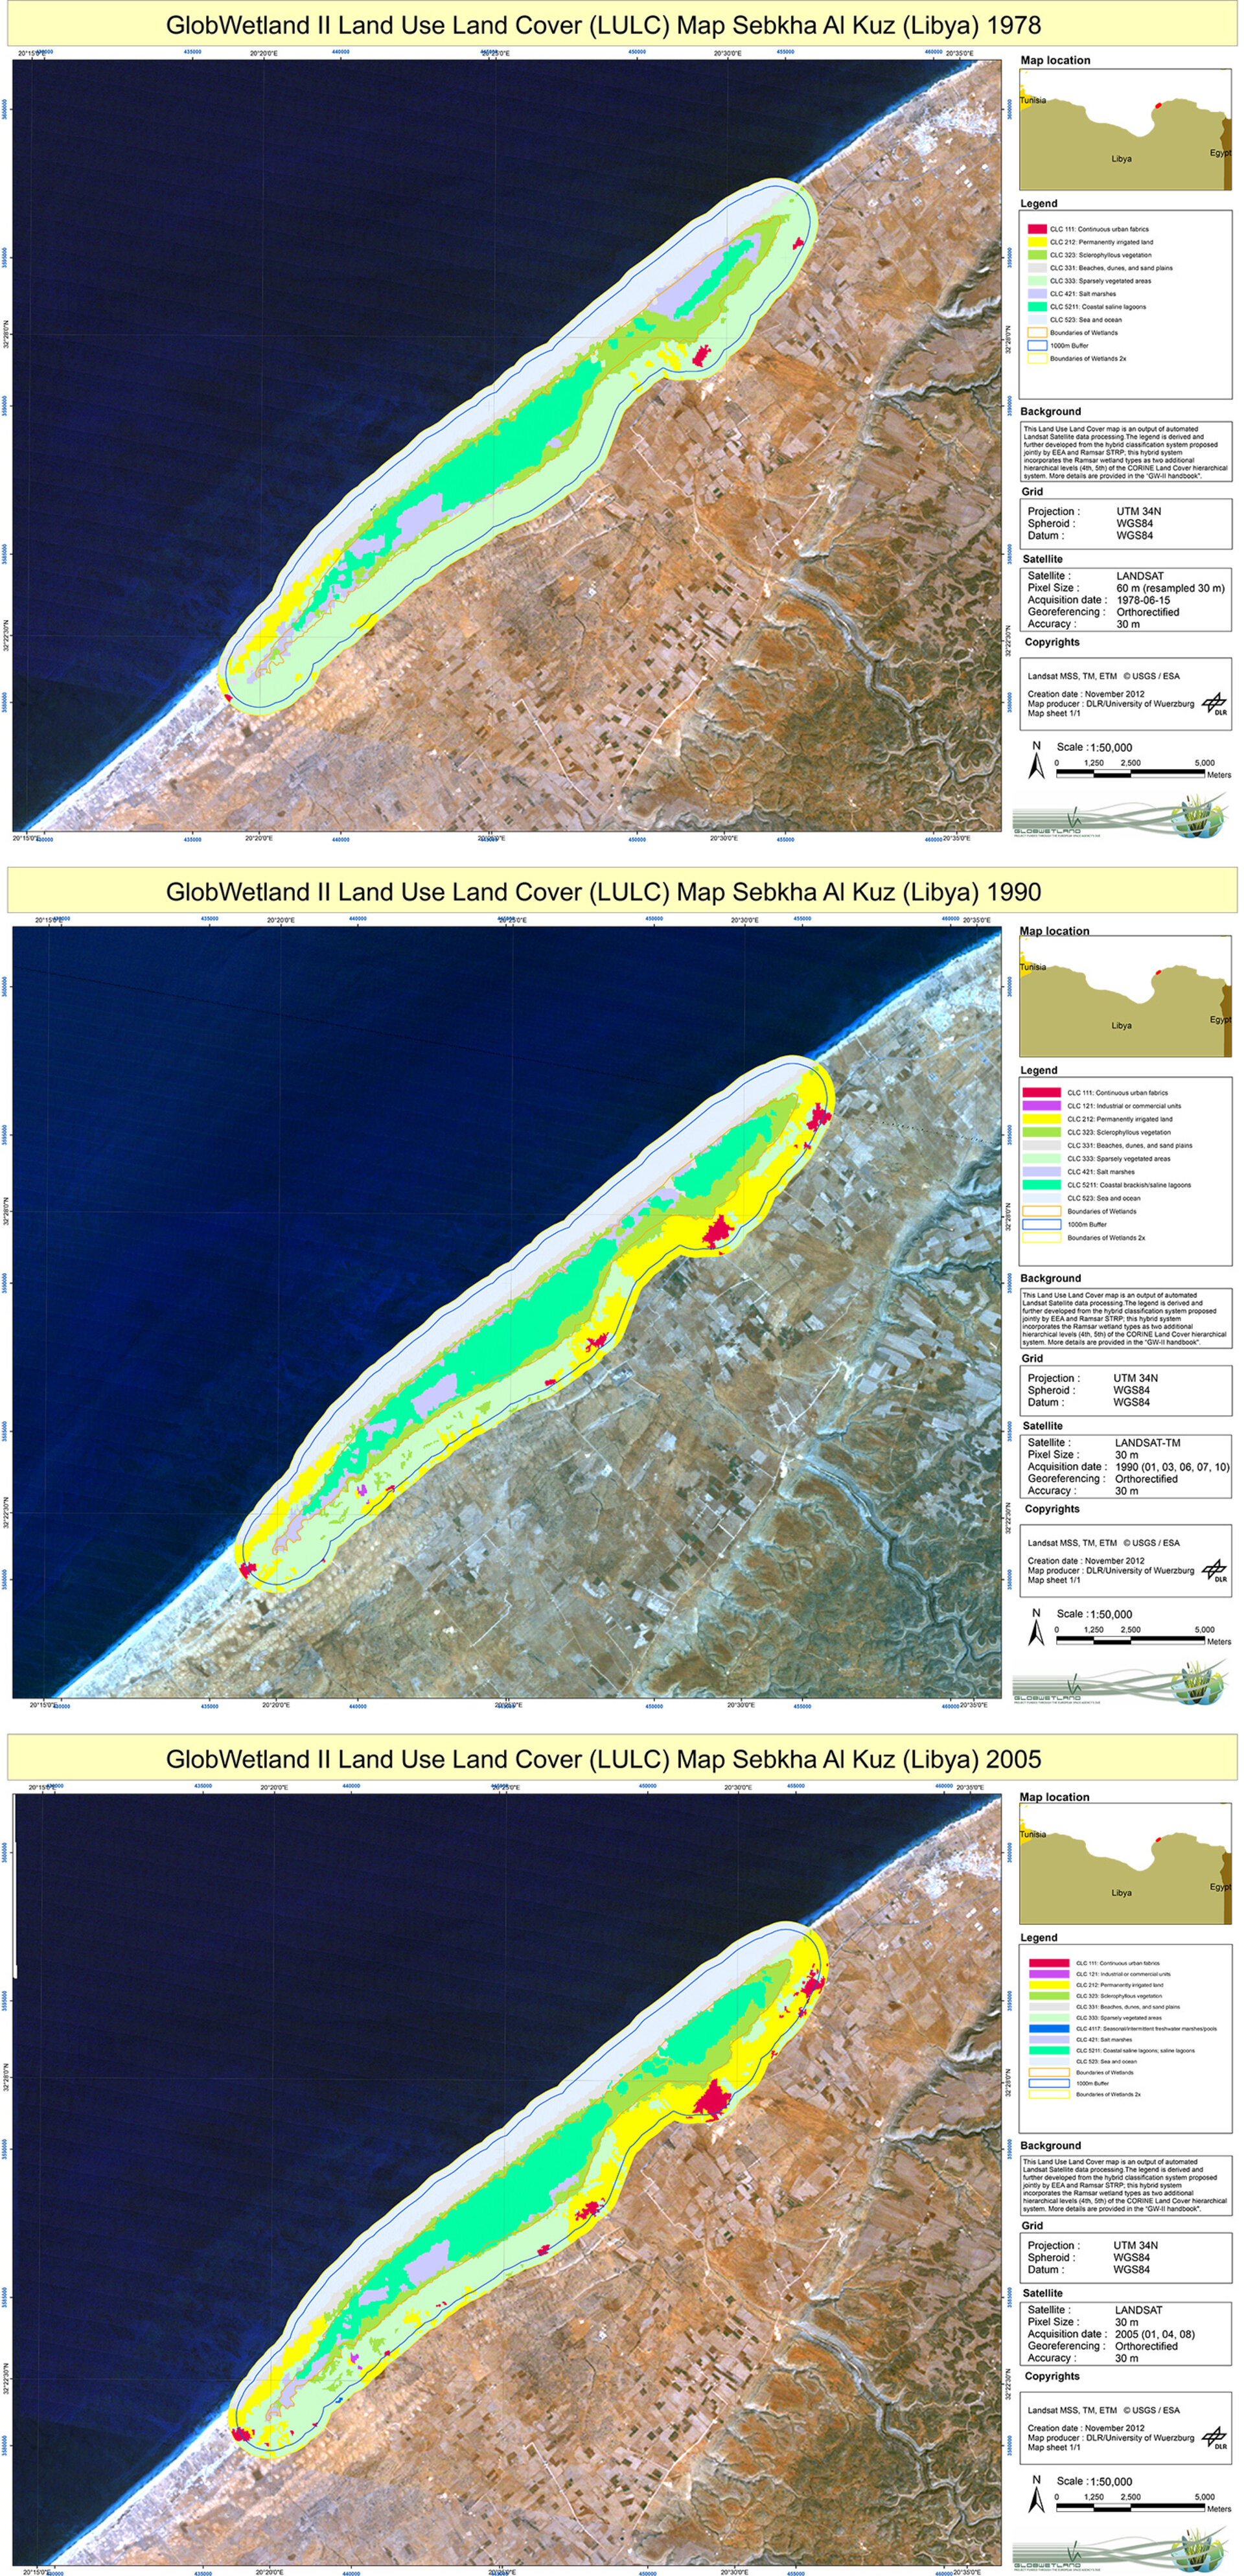 Wetland monitoring in Libya